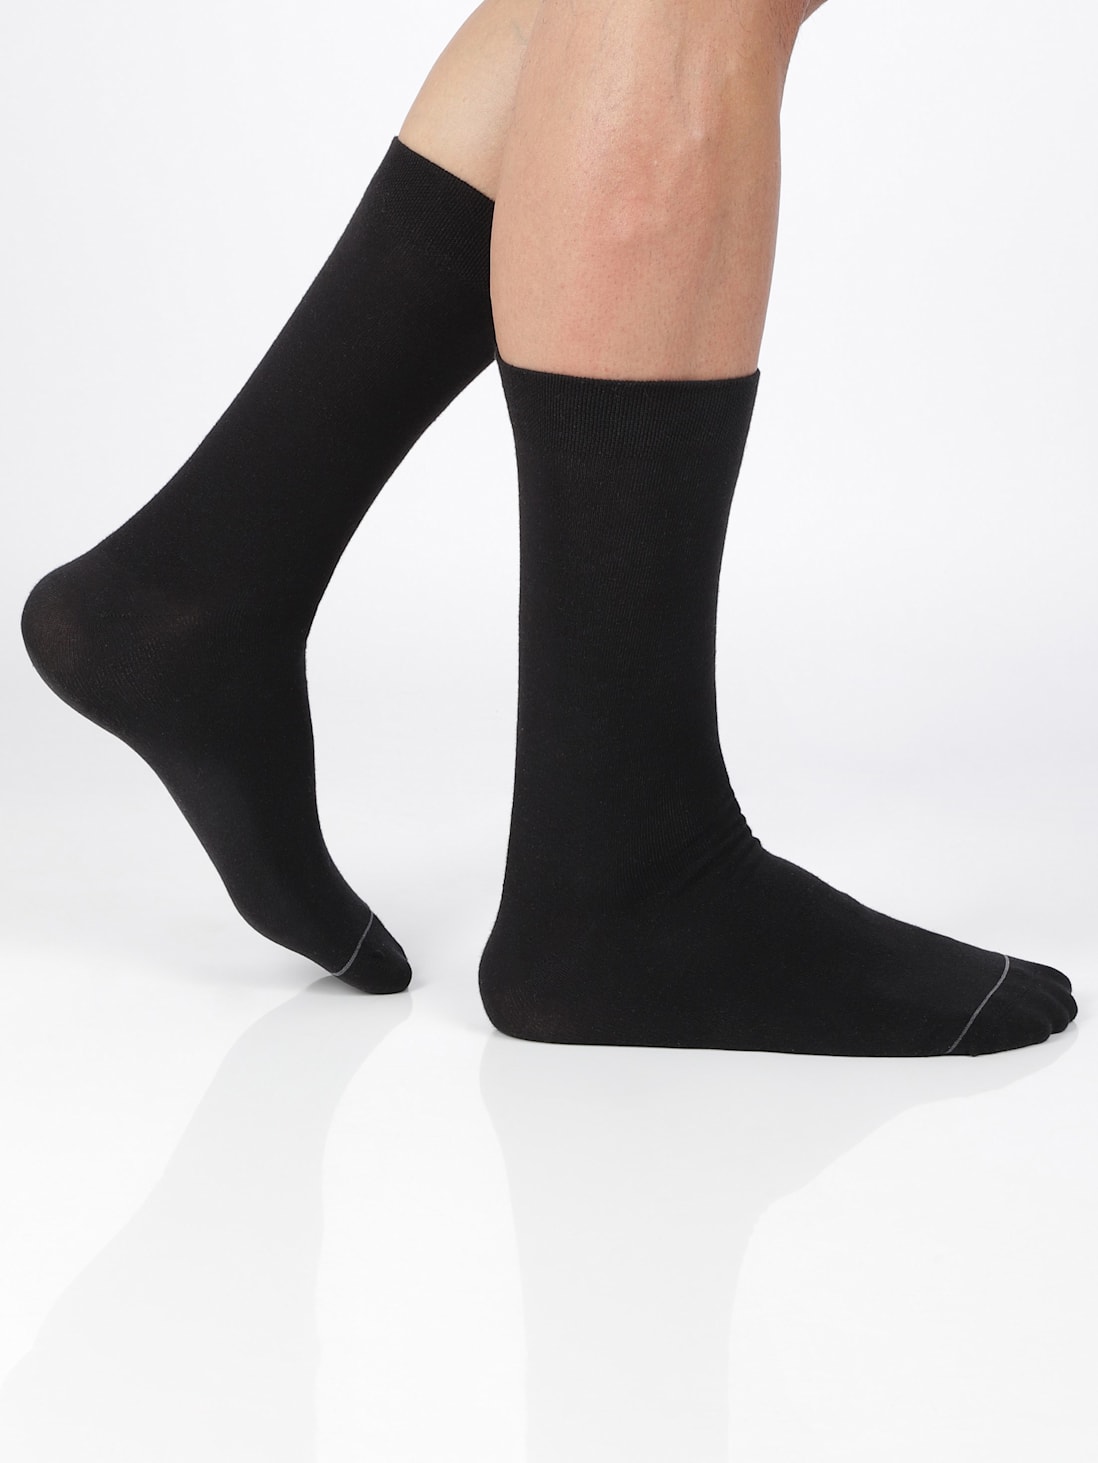 Buy Men's Modal Cotton Stretch Crew Length Socks with Stay Fresh Treatment  - Black 7390